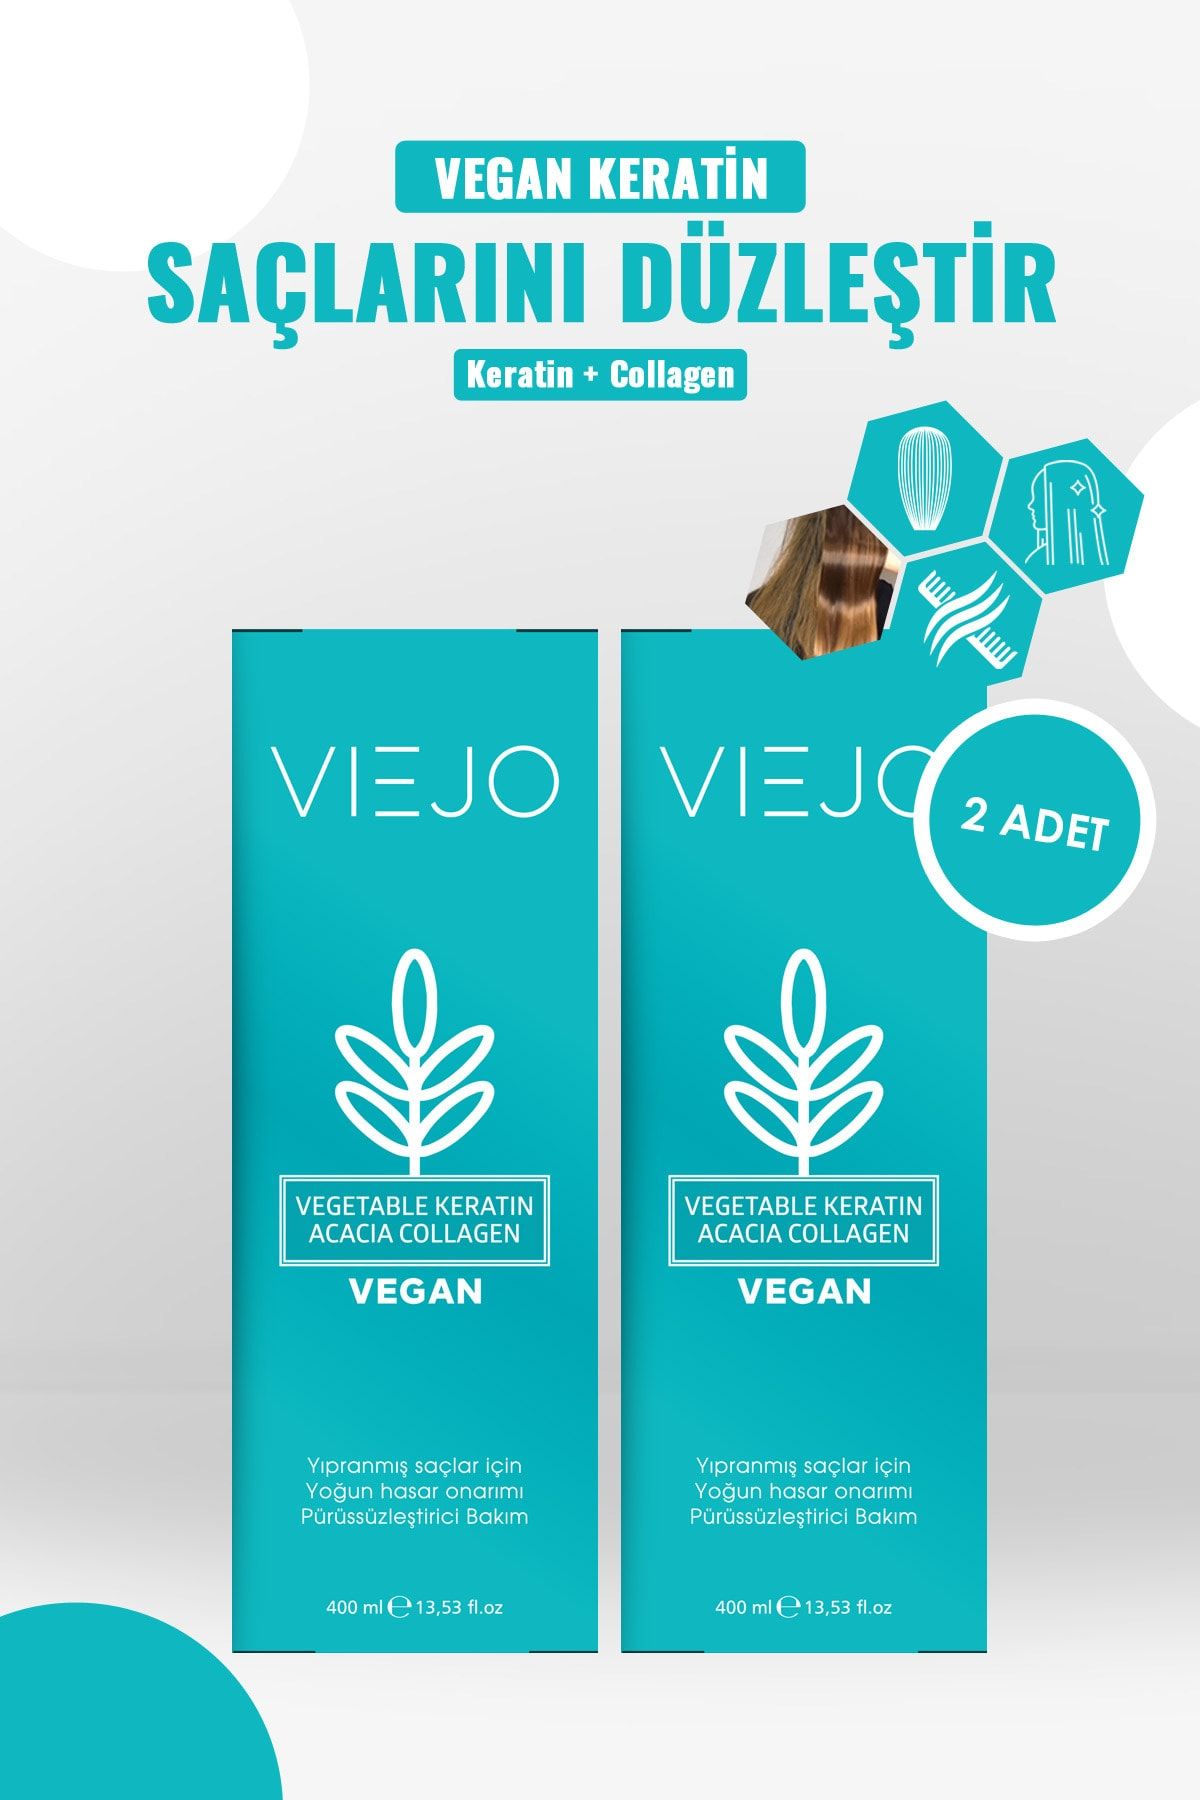 Viejo 2 Adet - Vegan Saç Keratini - Collagen - Saç Düzleştirici